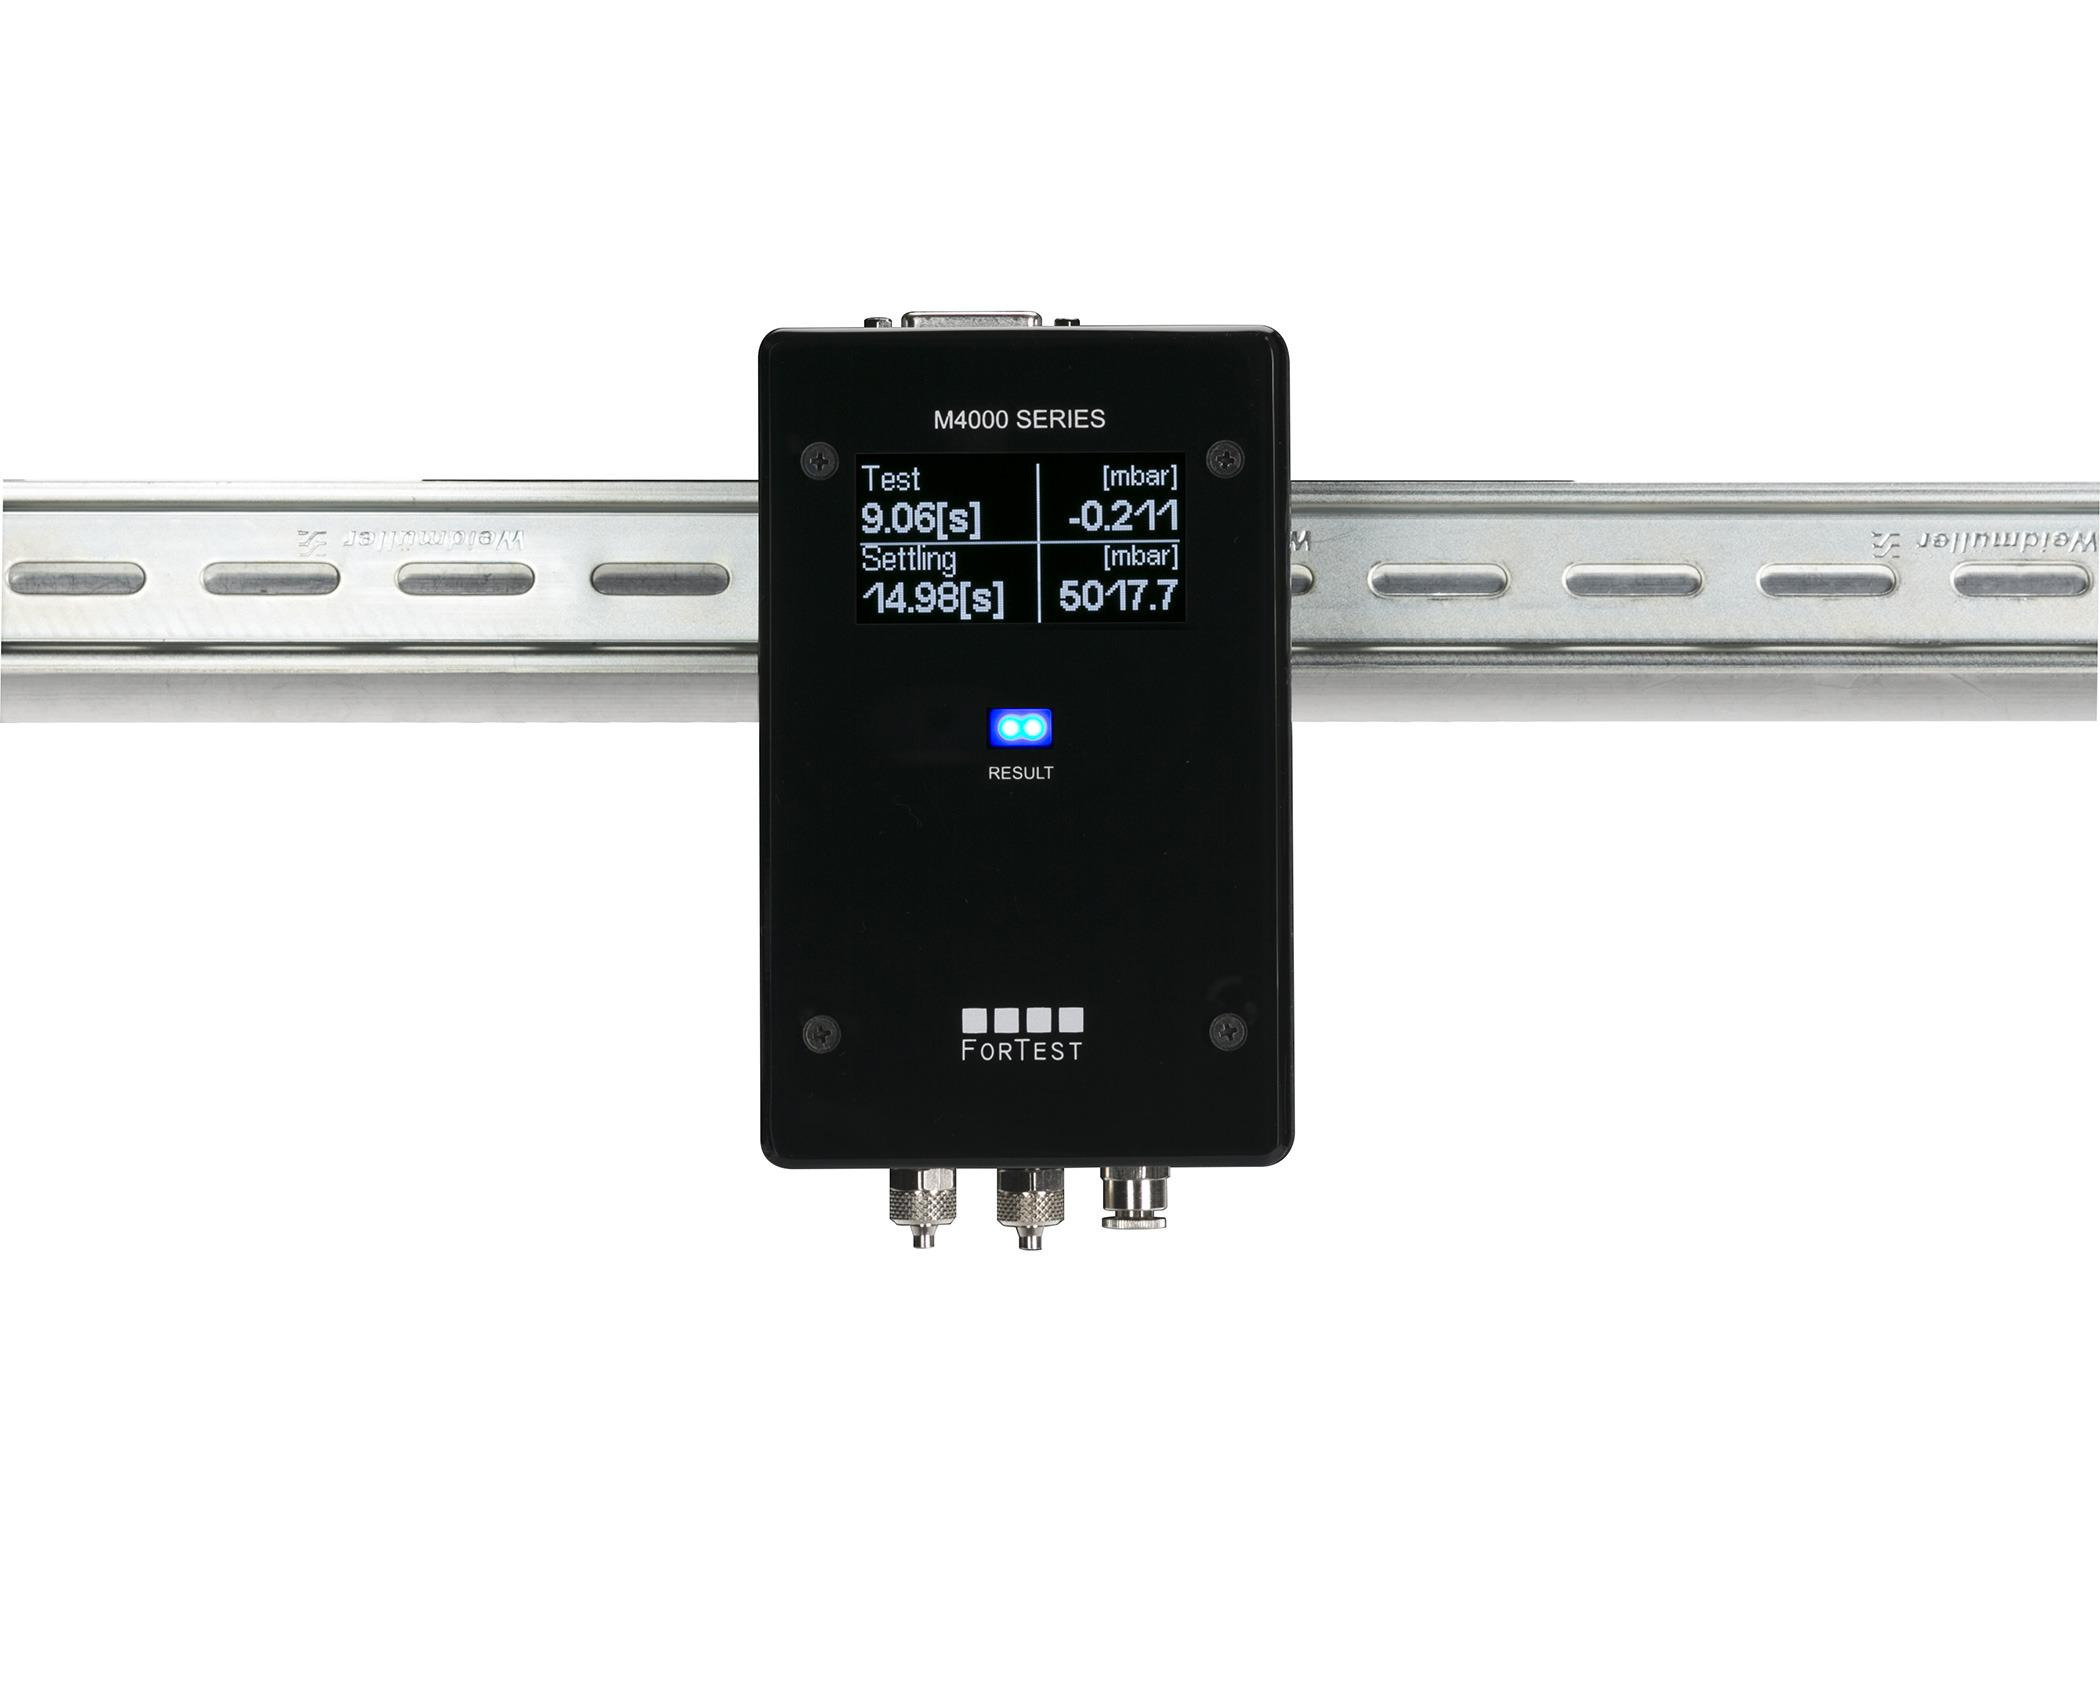 T4890, Absolute Micro-Channel Bi-Channel Test Instrument